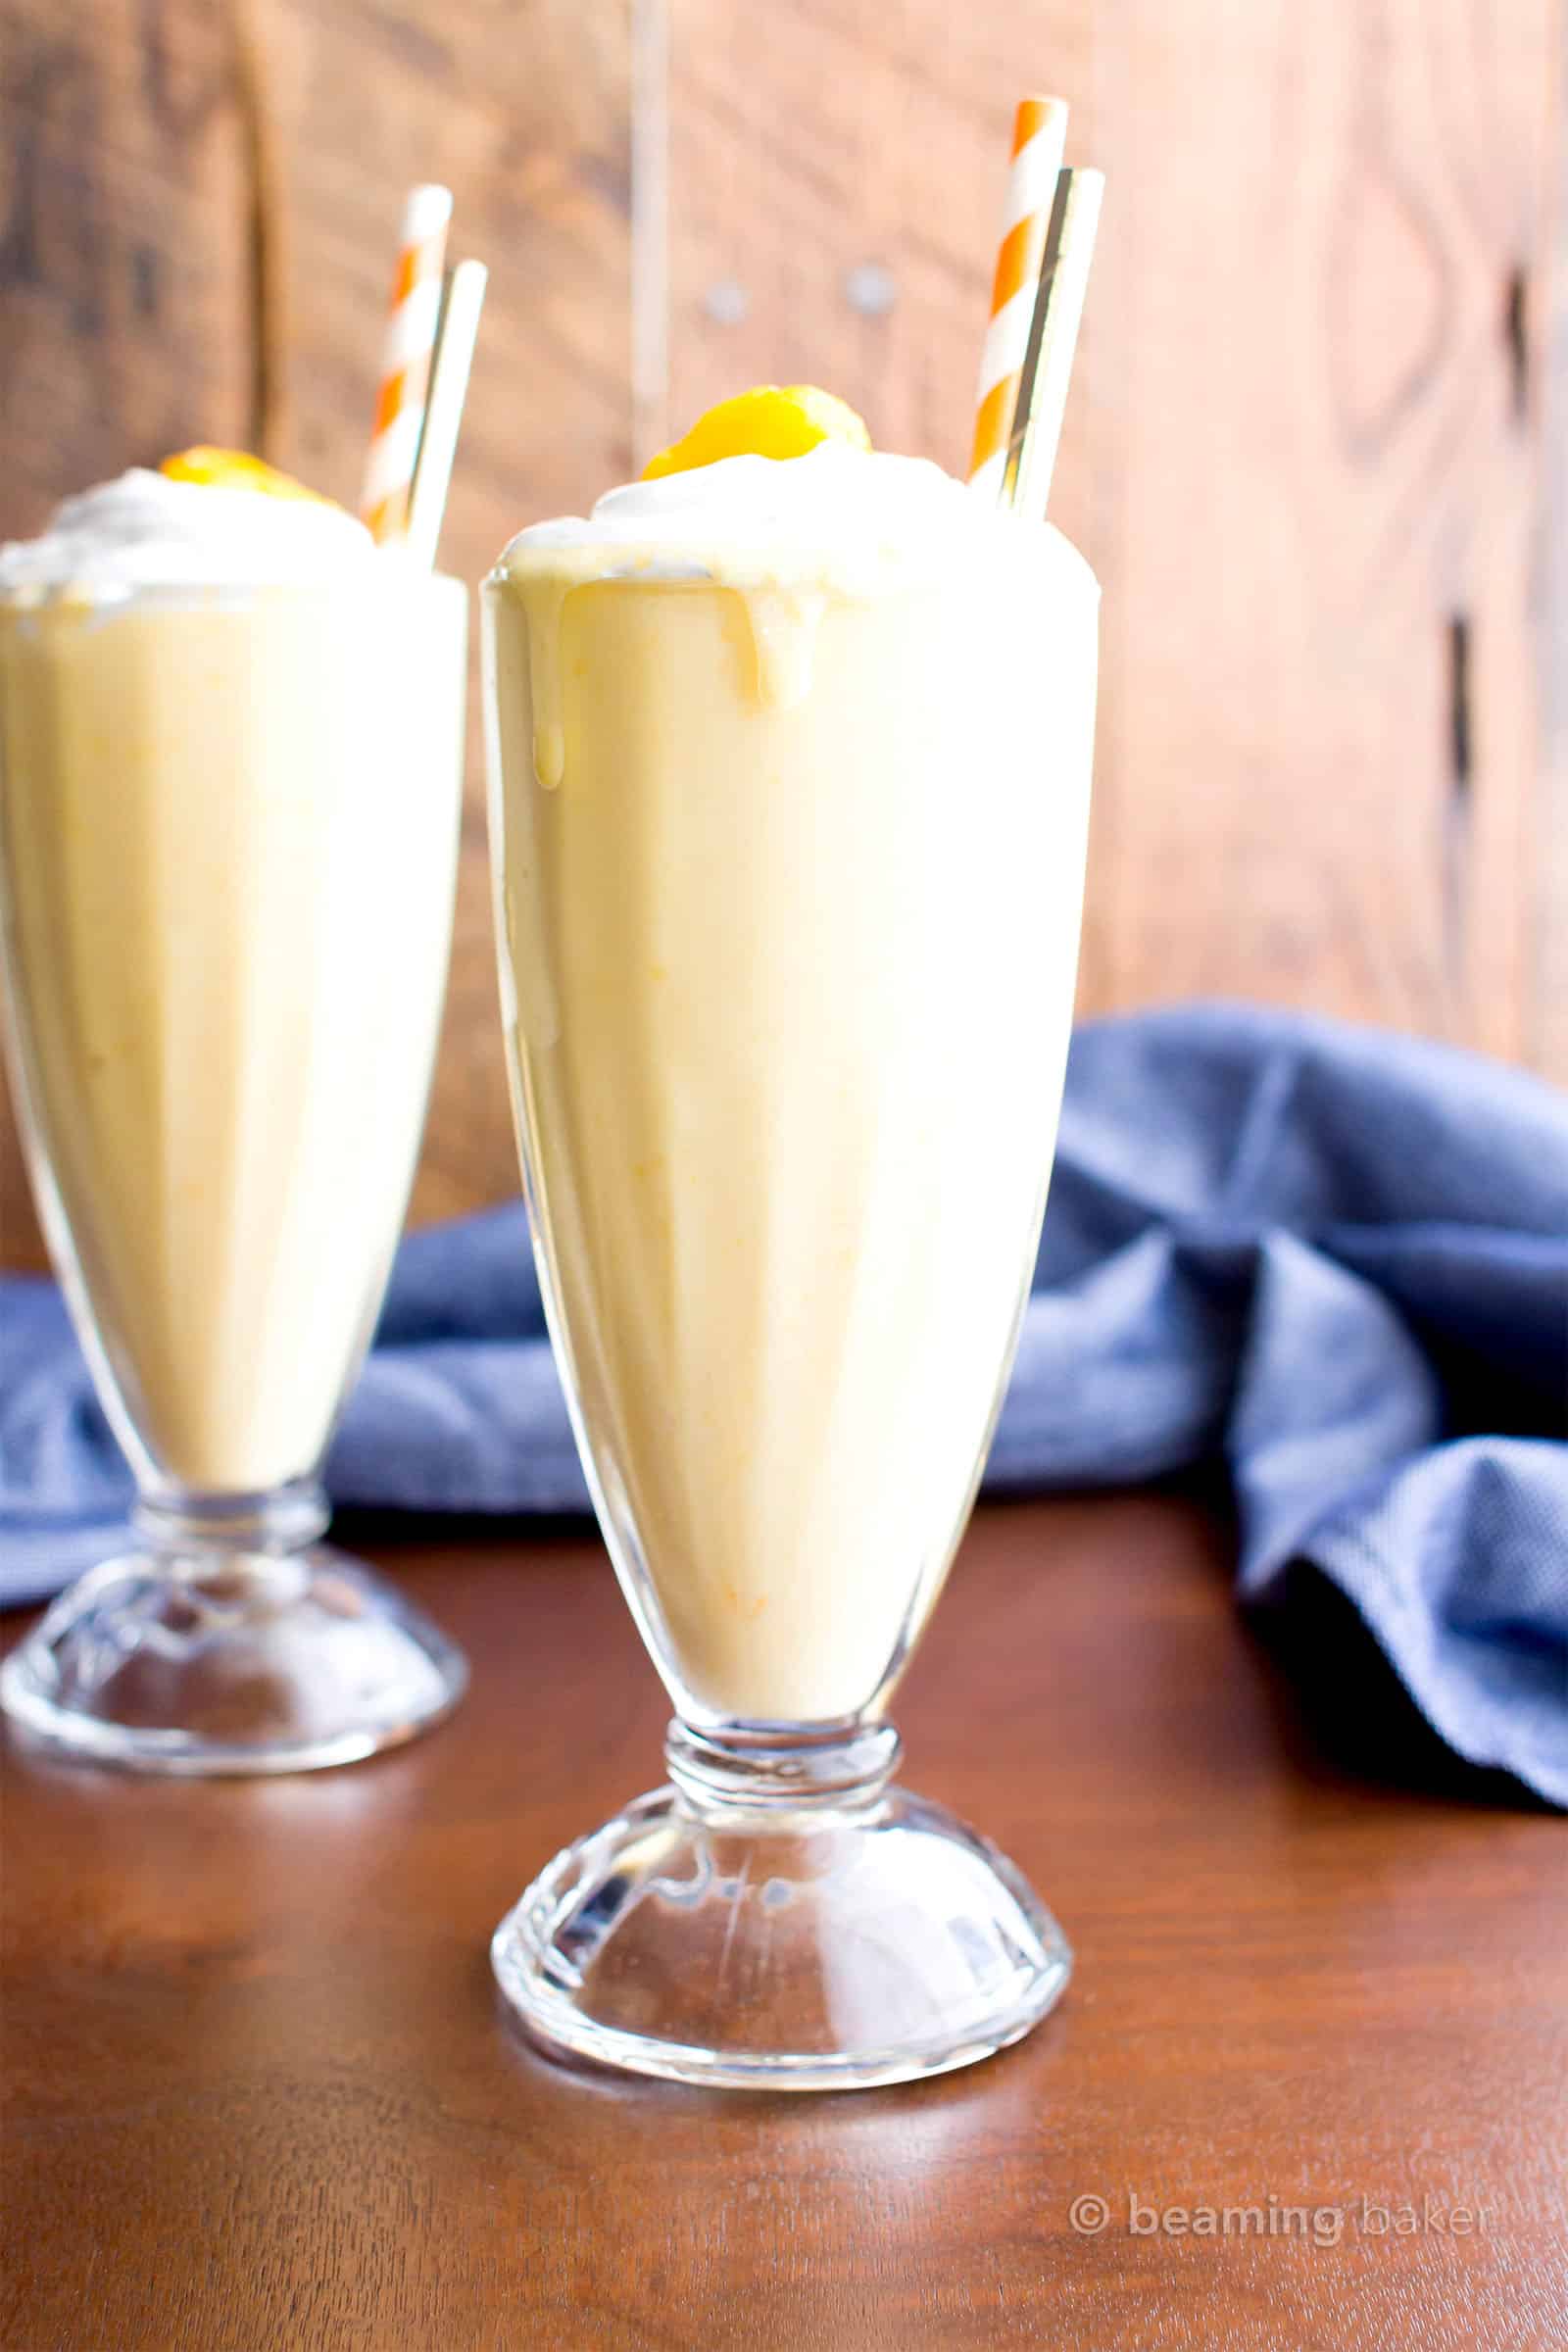 Mango Vegan Milkshake: this 3 ingredient vegan milkshake recipe is thick ‘n creamy with delicious mango coconut flavor. The easiest homemade vegan milkshake! #Vegan #Milkshake #Mango | Recipe at BeamingBaker.com